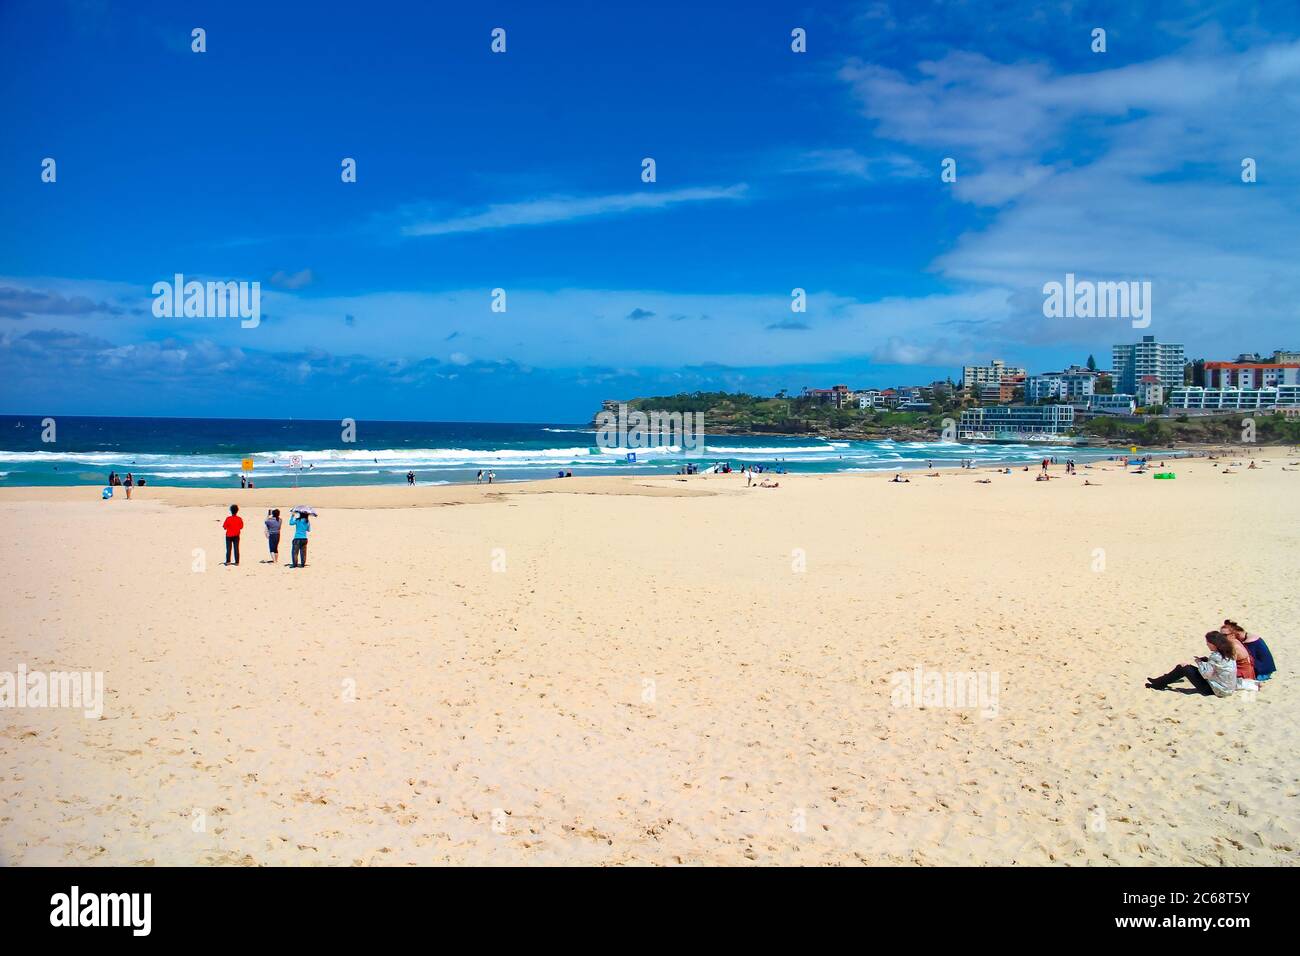 Quiet beach scene at Bondi Beach, the most famous beach of Sydney, New South Wales, Australia. Stock Photo